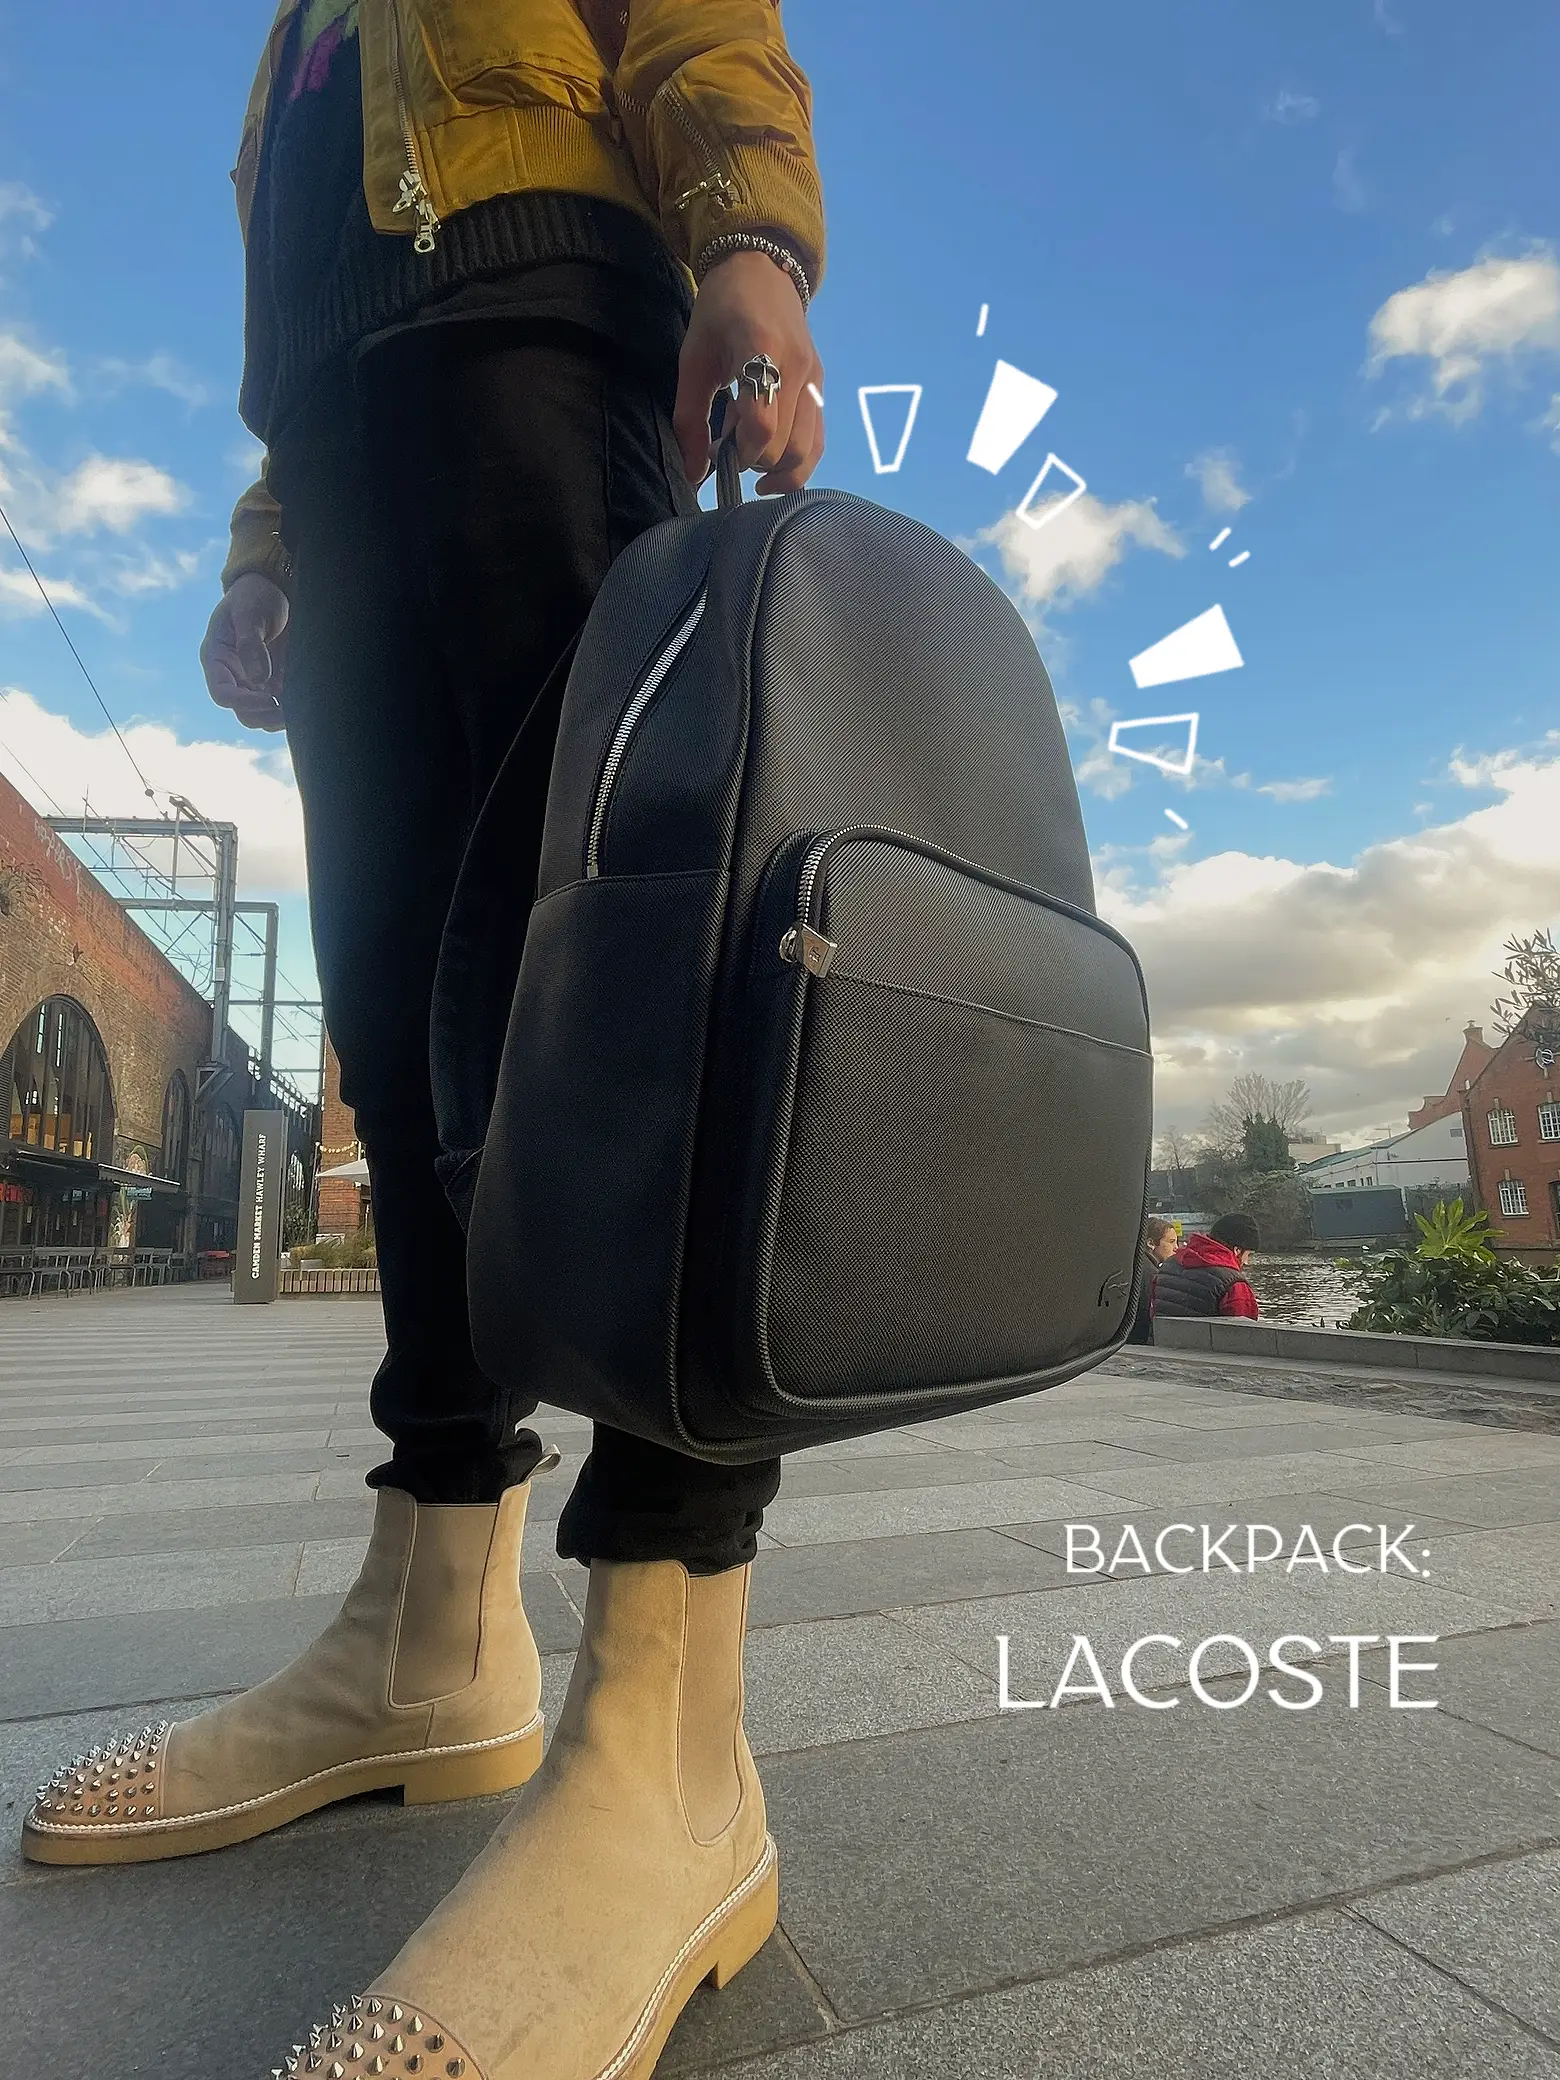 vintage backpacks for school - Lemon8 Search